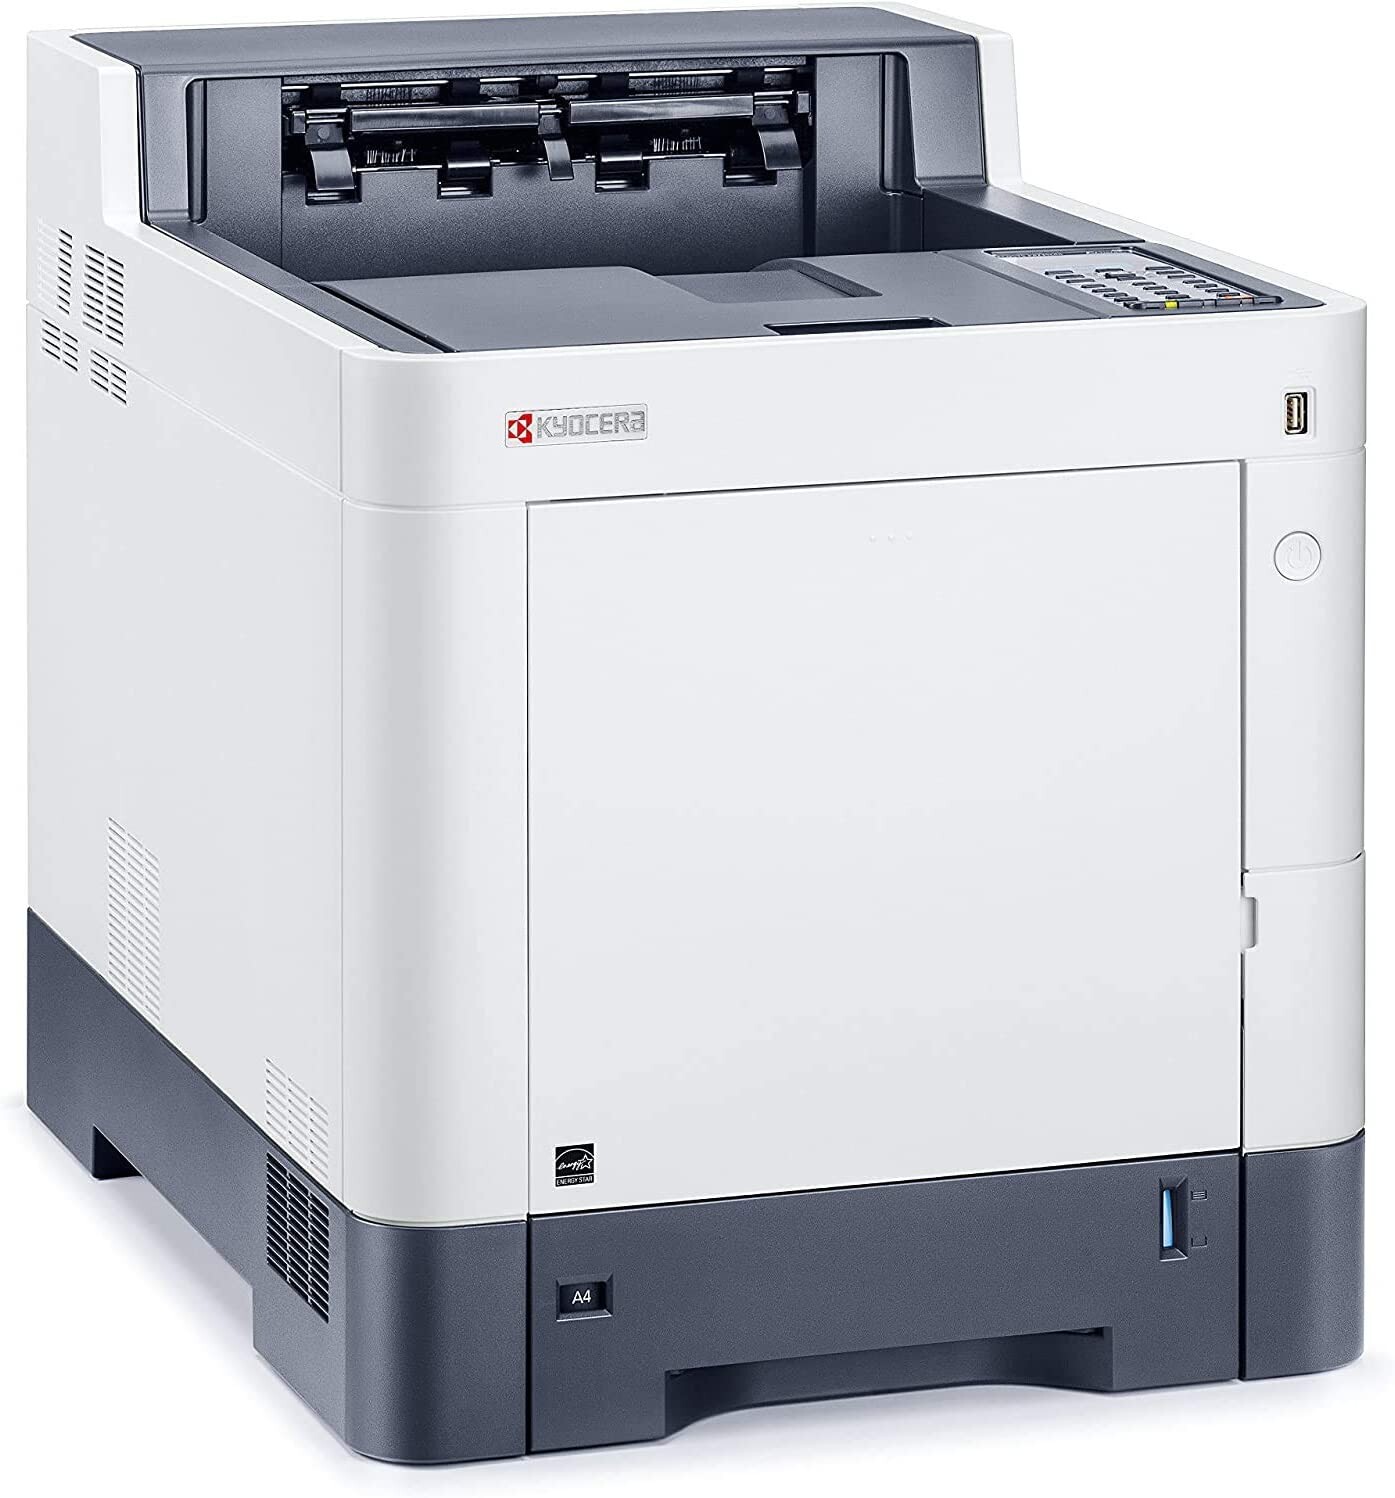 Kyocera-ECOSYS-P6235cdn-color-Laser-A4-Drucker